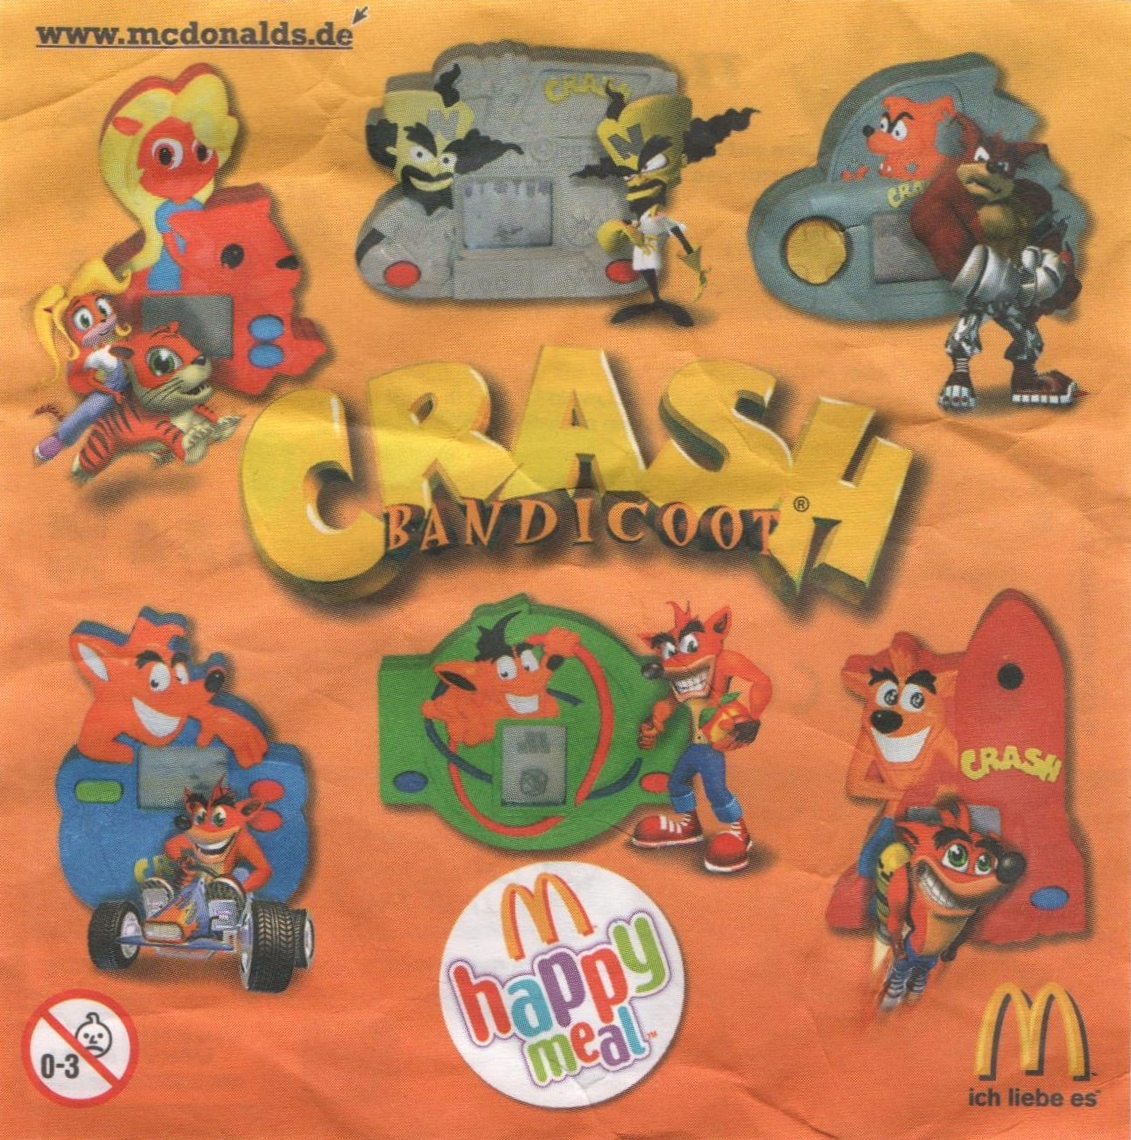 I got the new crash bandicoot card game from mcdonalds! : r/crashbandicoot